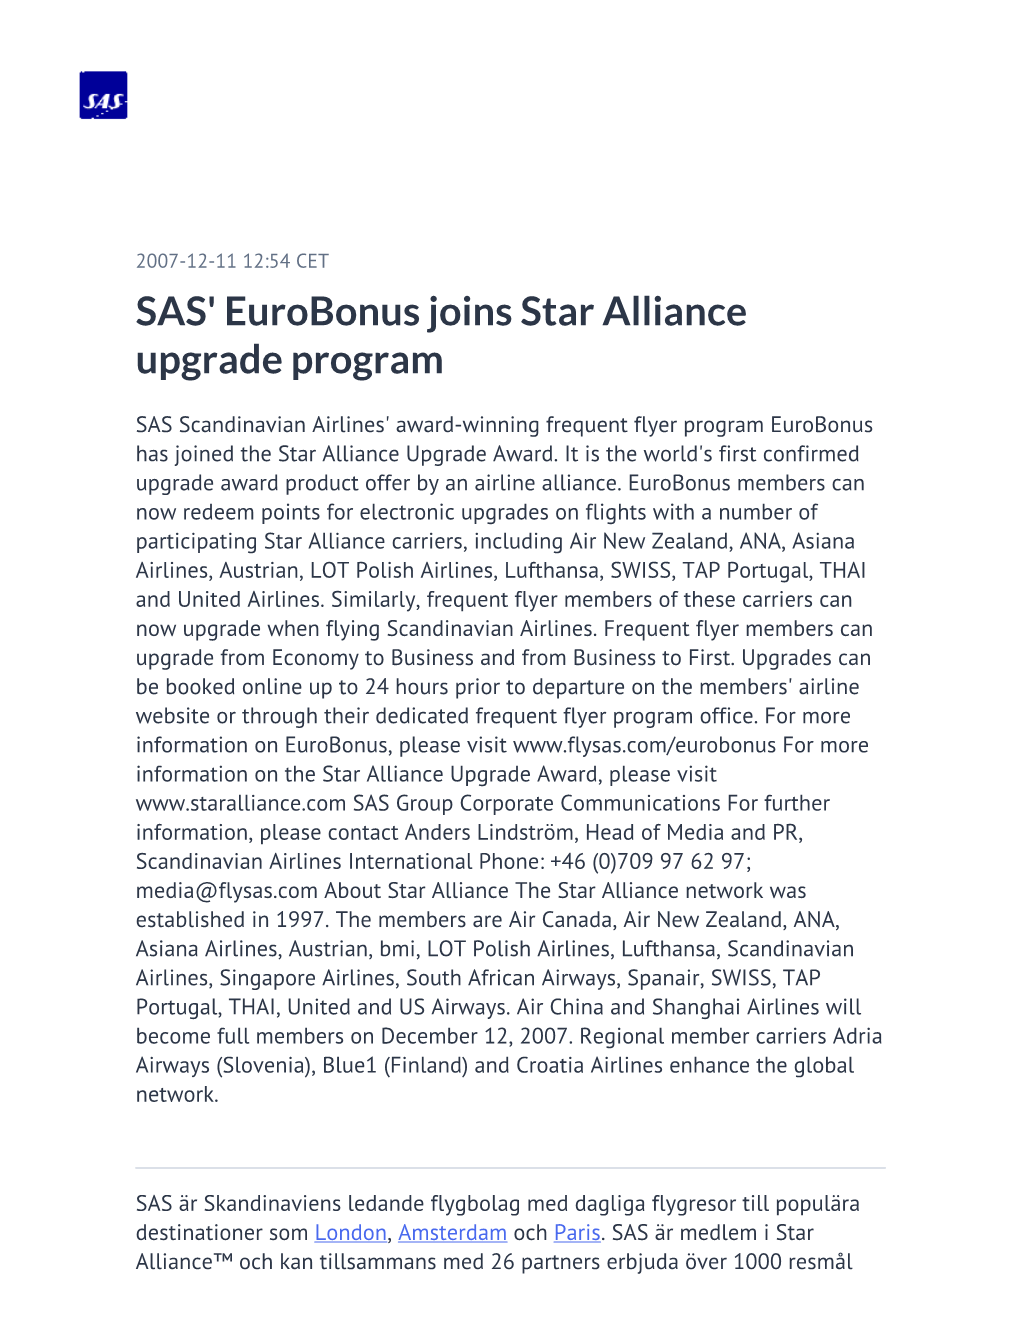 SAS' Eurobonus Joins Star Alliance Upgrade Program